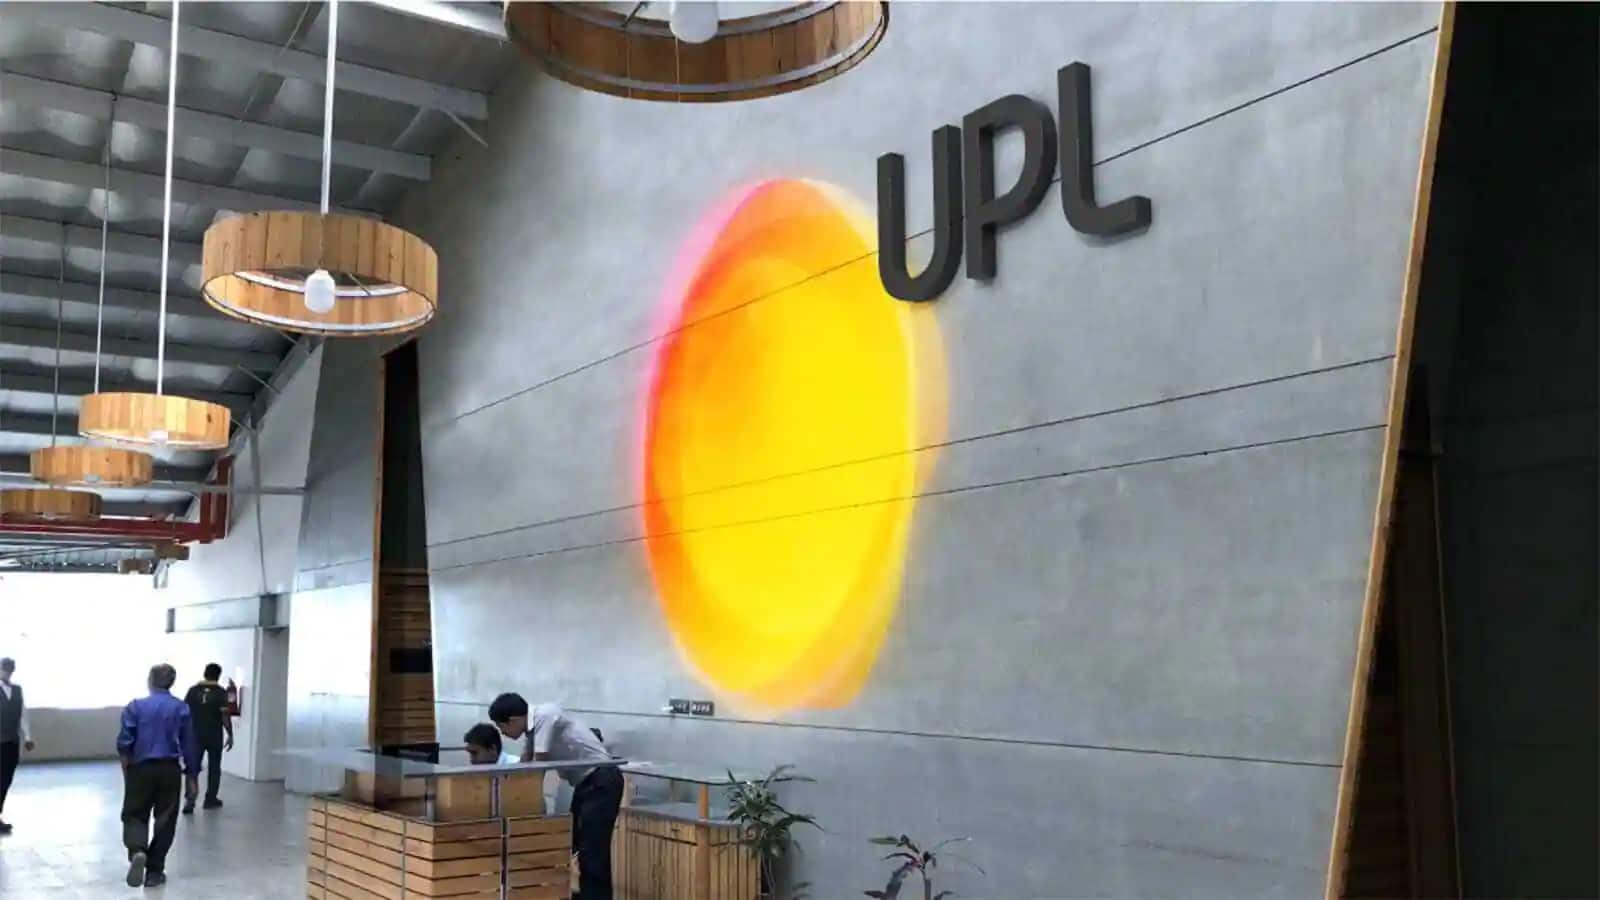 UPL shares trade marginally higher on hopes of robust Q4 earnings